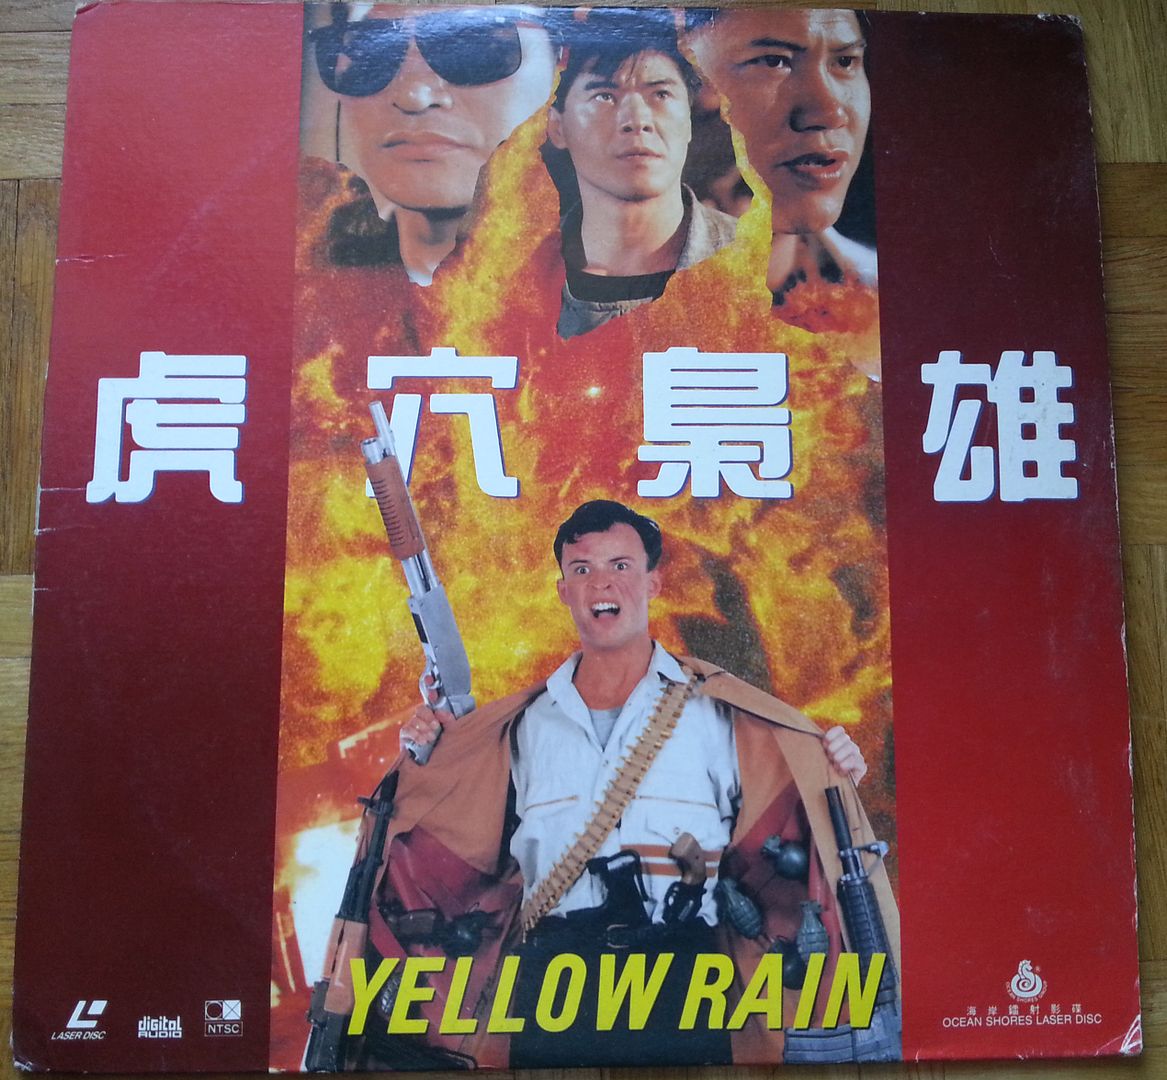  photo yellow rain_zpsjlskccpg.jpg